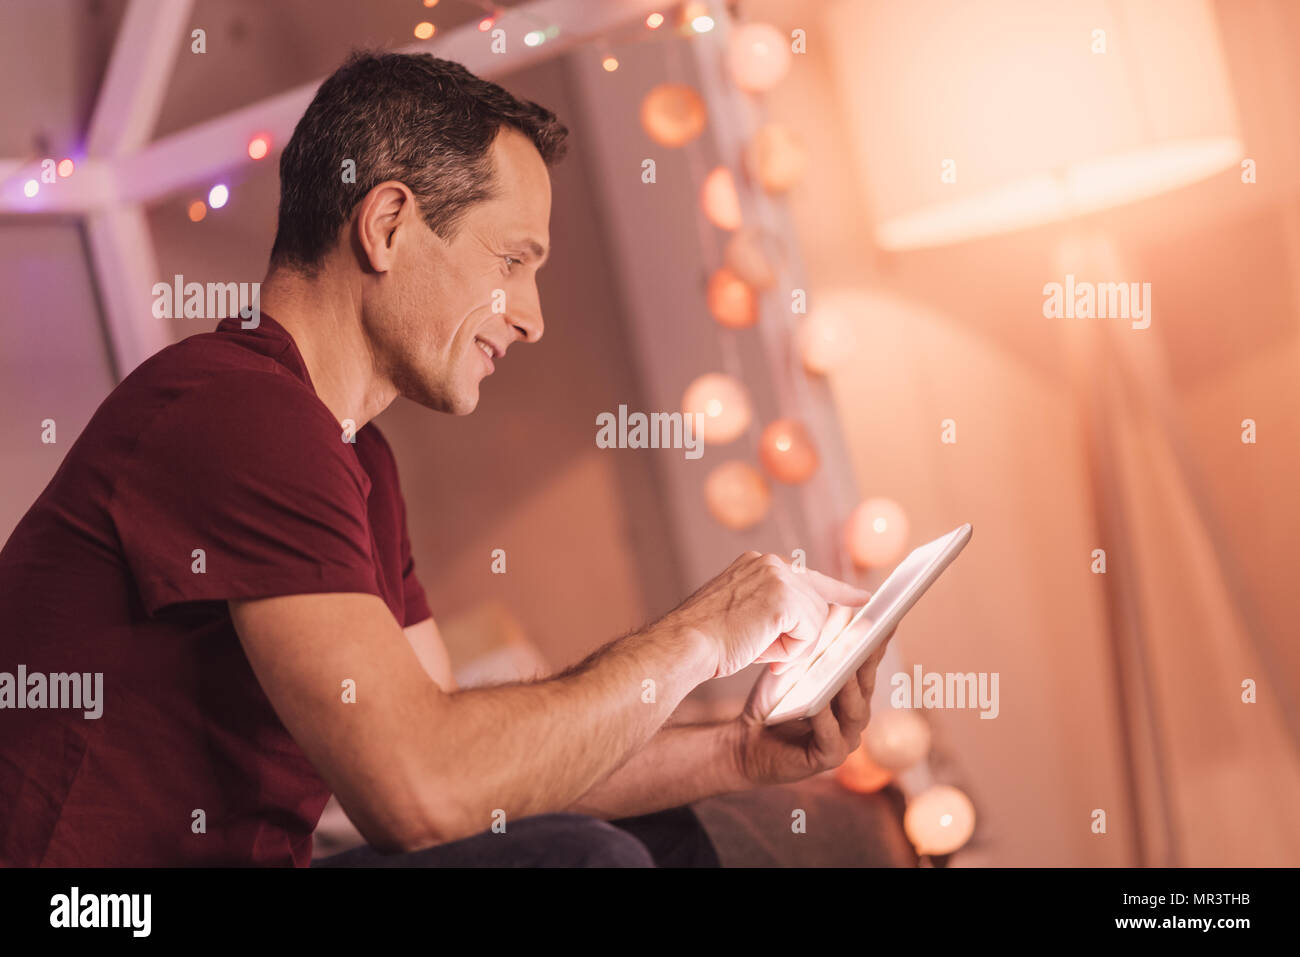 Joyful handsome man browsing the Internet Stock Photo